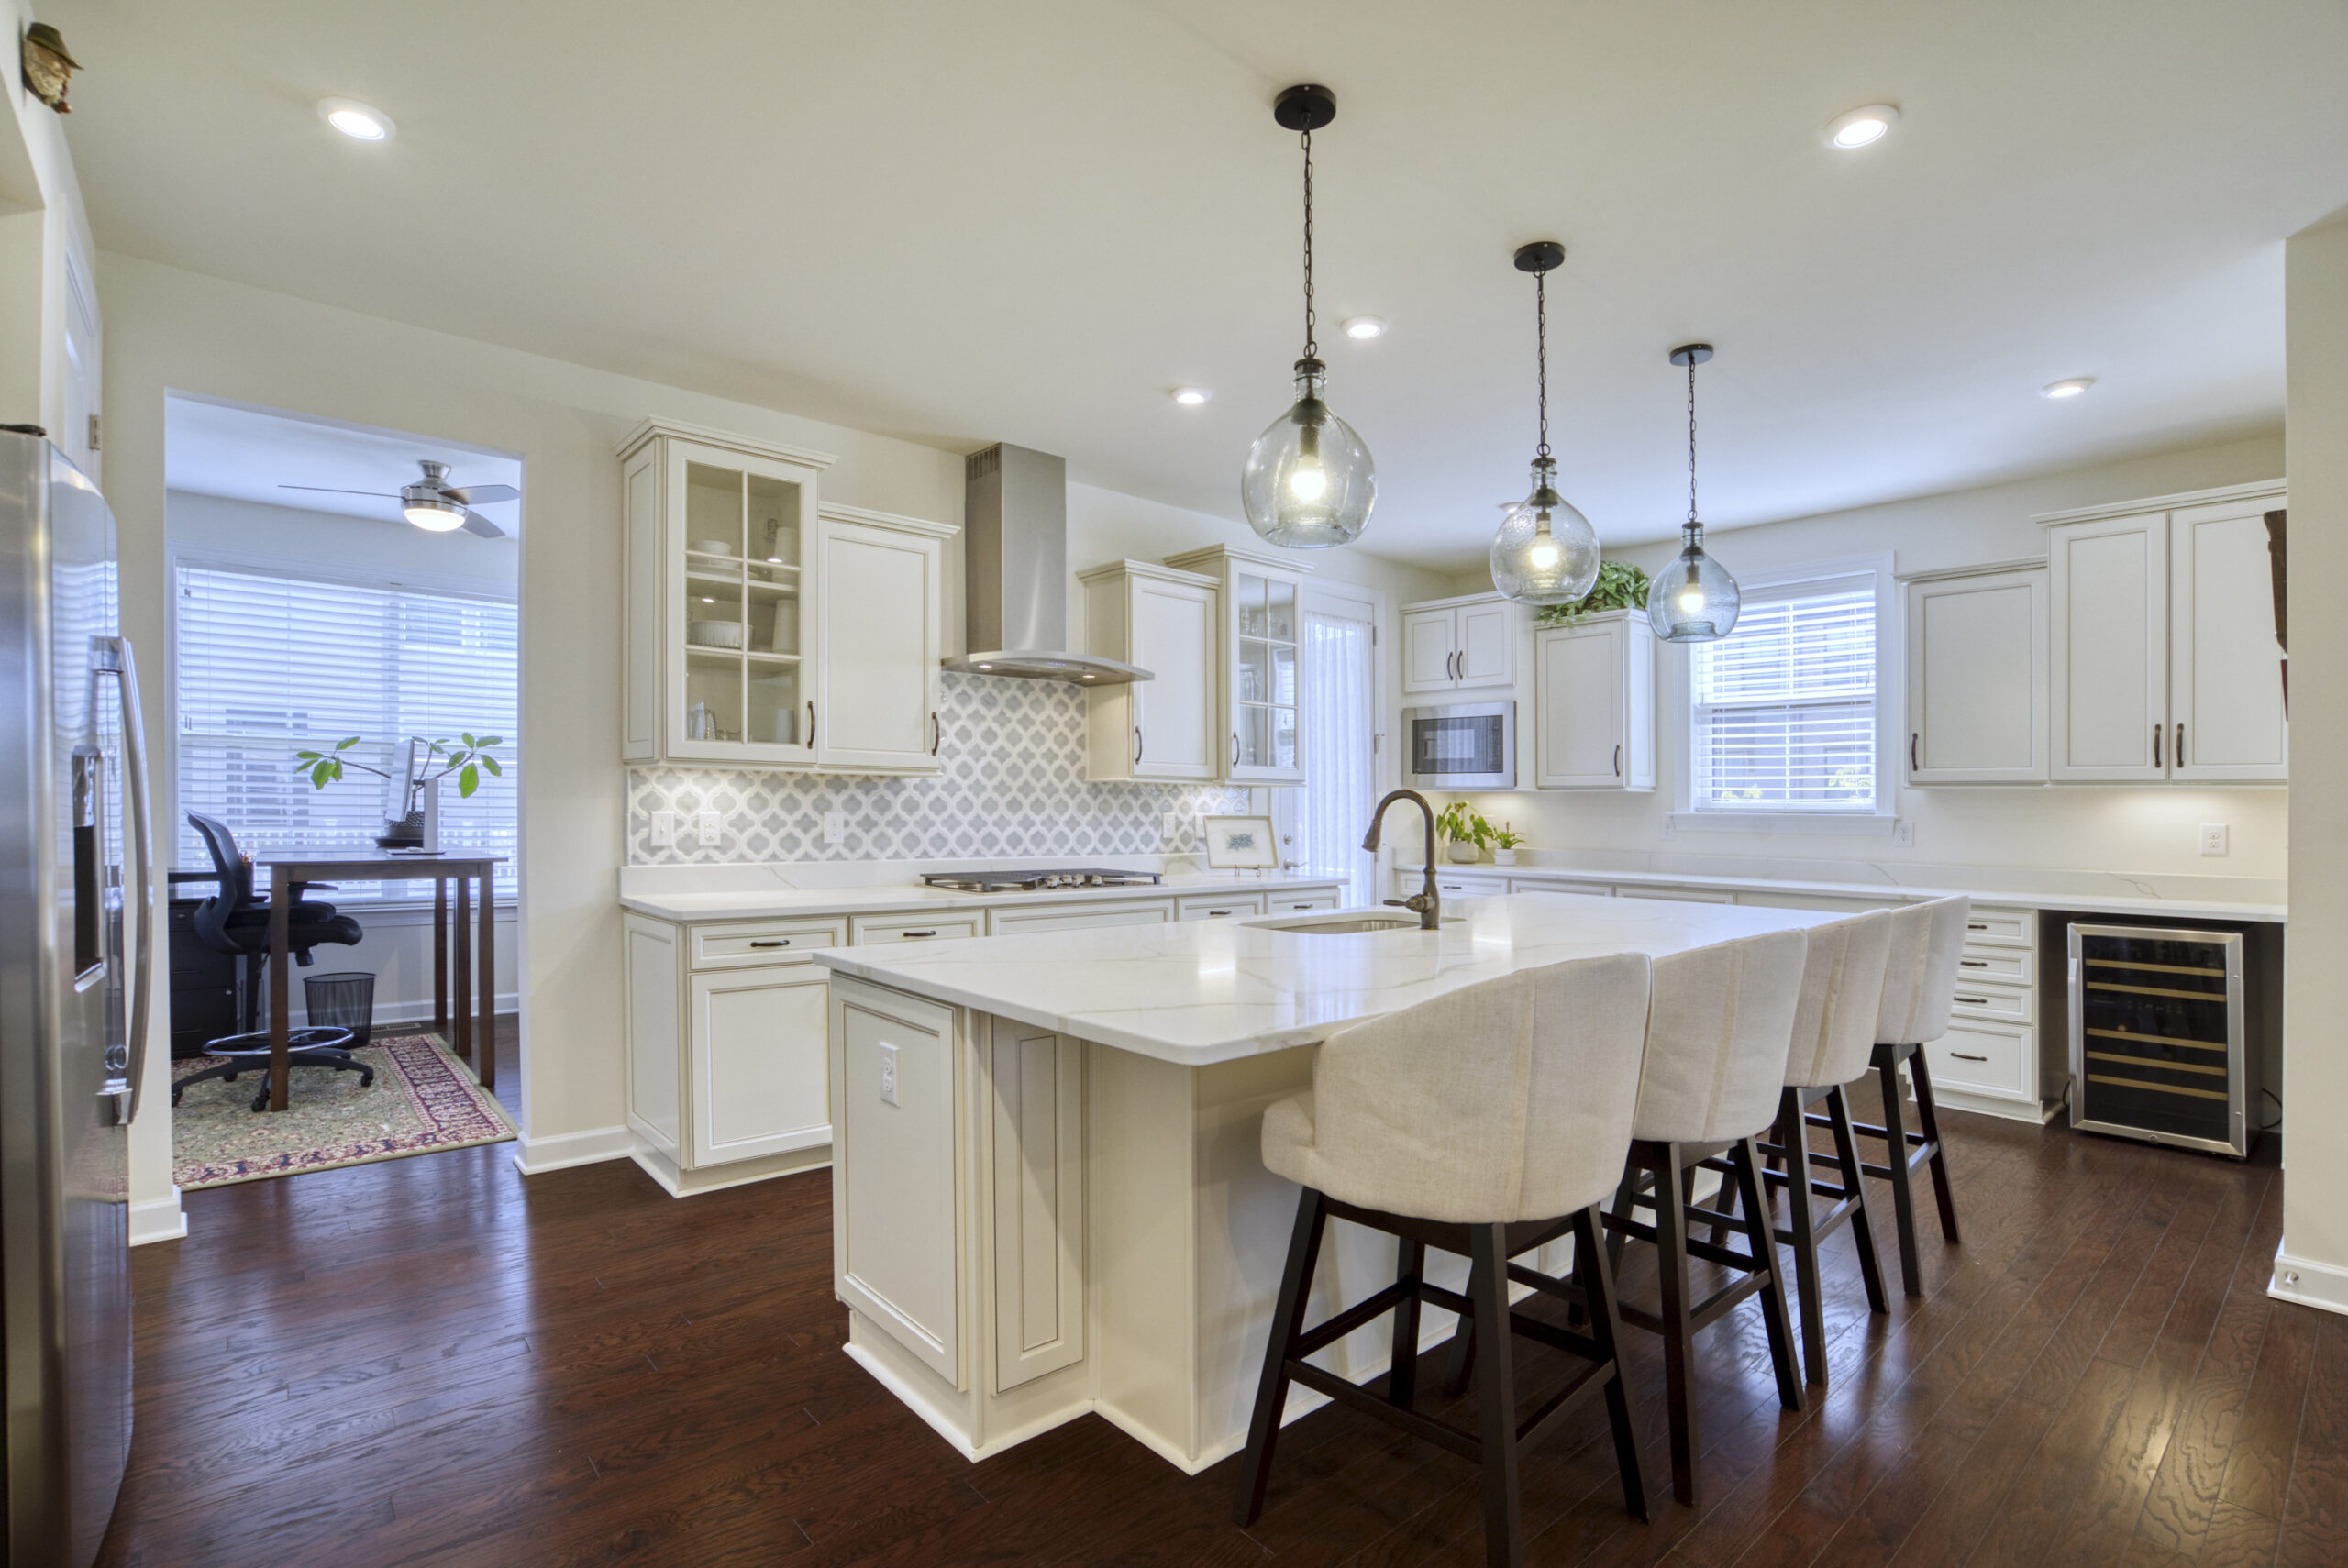 Professional interior photo of 8109 Zoe Place, Alexandria, VA - Showing the kitchen with large quartz island